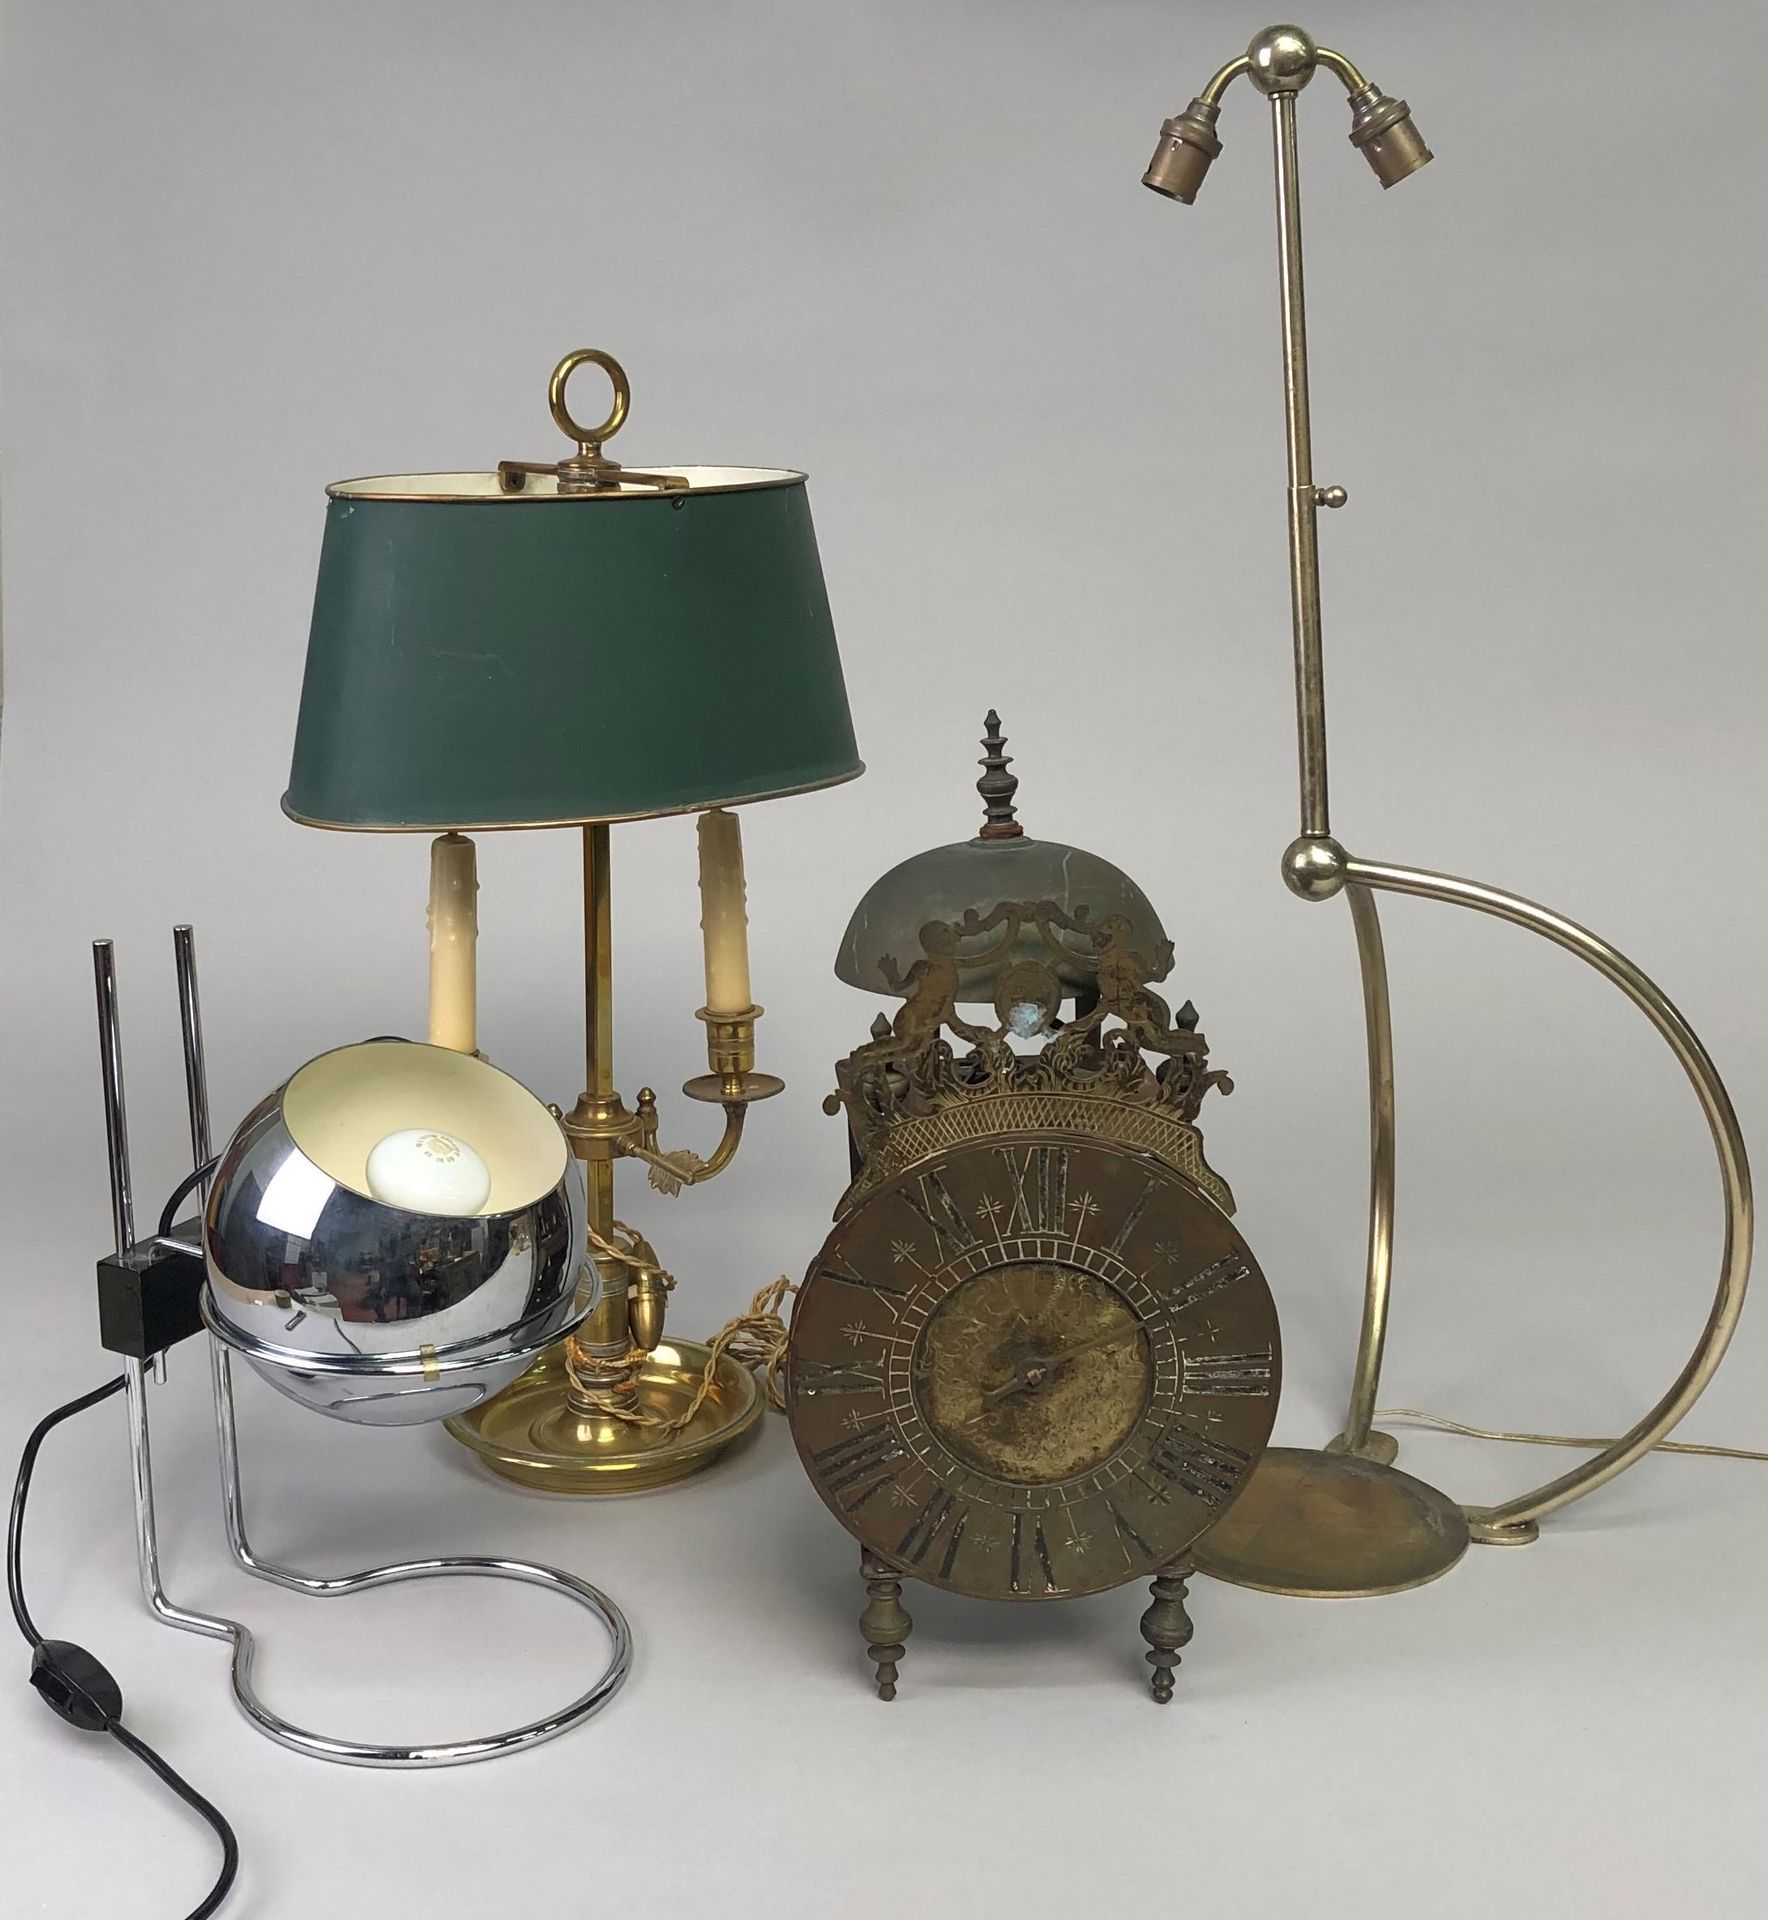 Null 曼内特包括:

- 一个金属彗星钟，表盘上有罗马数字。高度：40厘米

- 一个灯架。高度：67厘米

- 一盏金属台灯和一盏鎏金黄铜热水瓶灯，绿色漆&hellip;